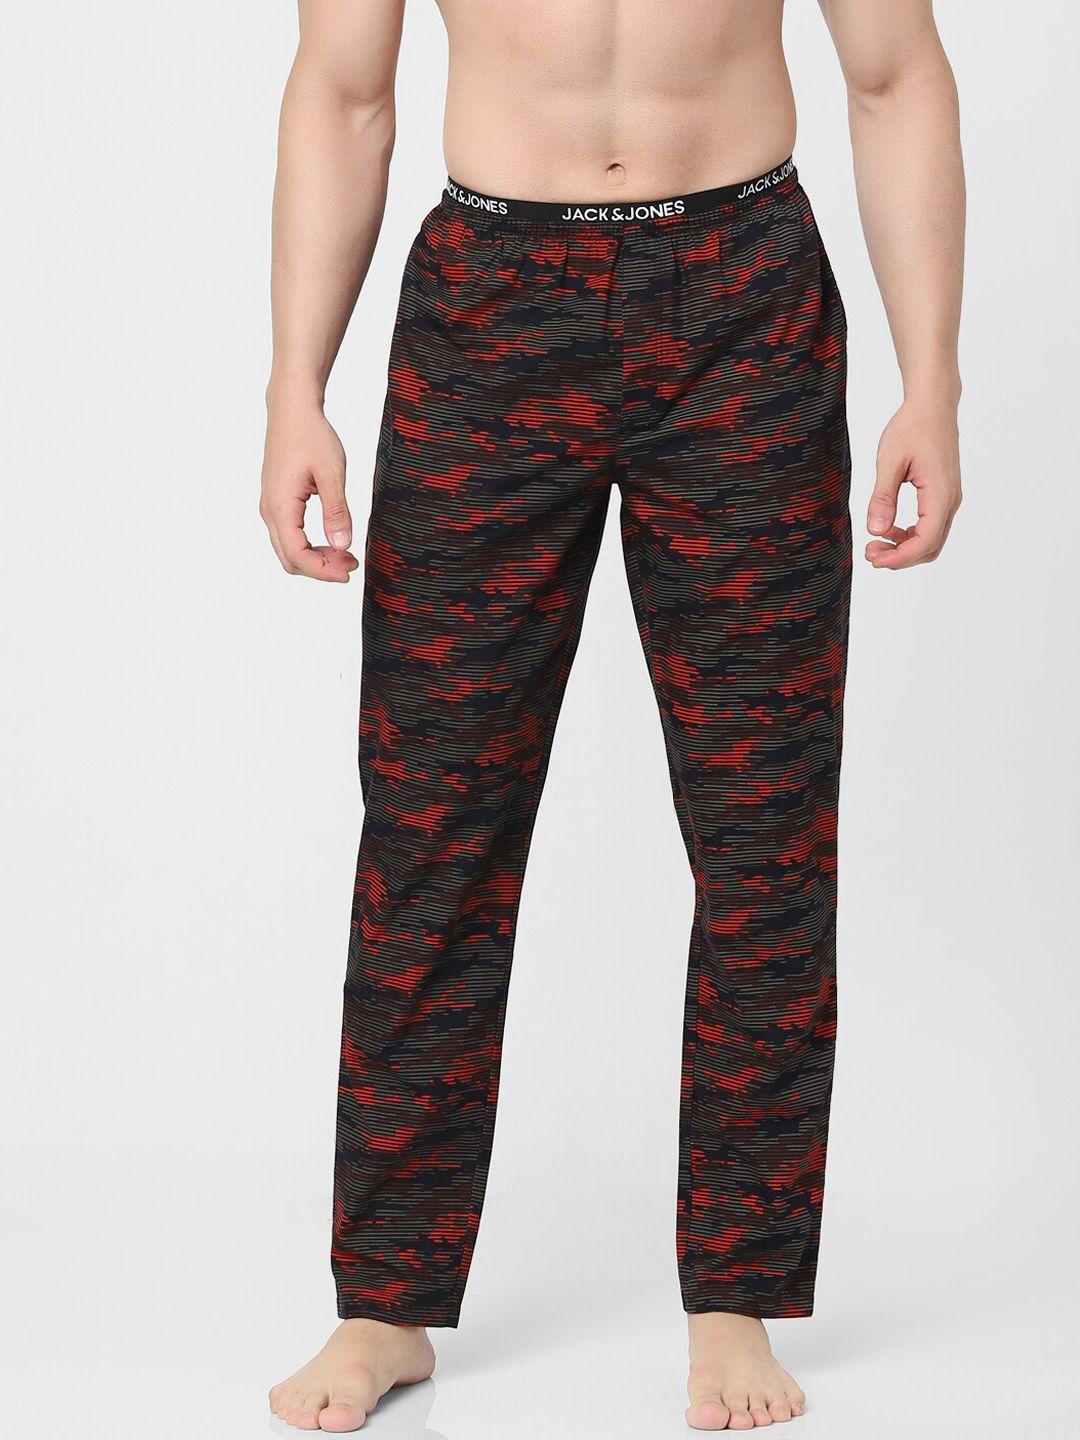 jack-&-jones-men-black-&-red-printed-cotton-track-pants